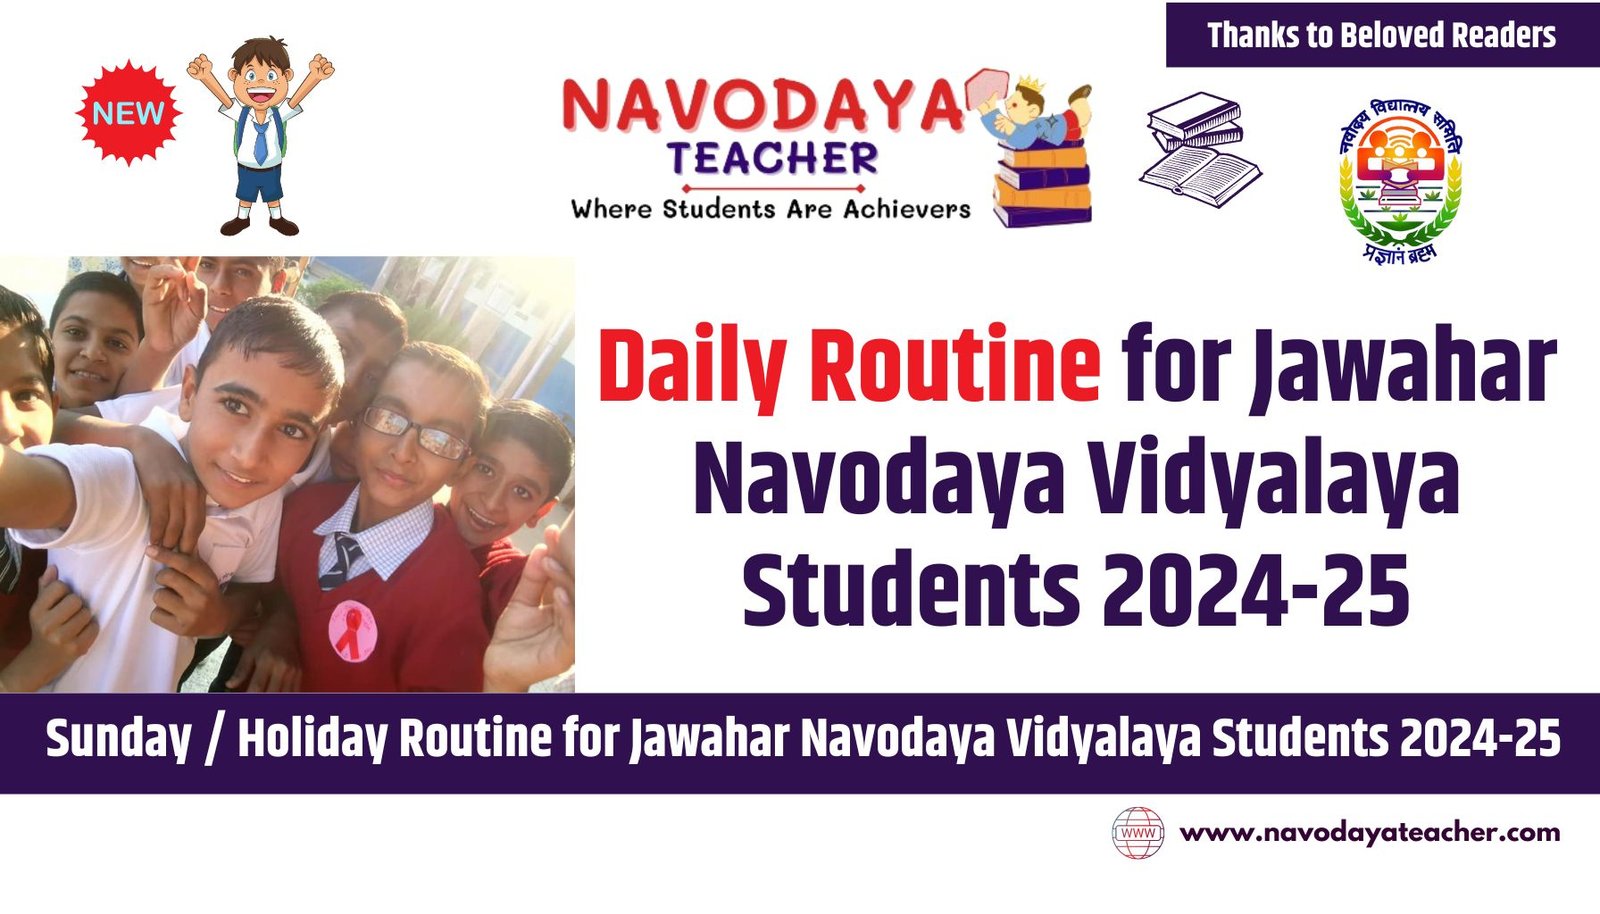 Daily Routine for Jawahar Navodaya Vidyalaya Students 2024-25